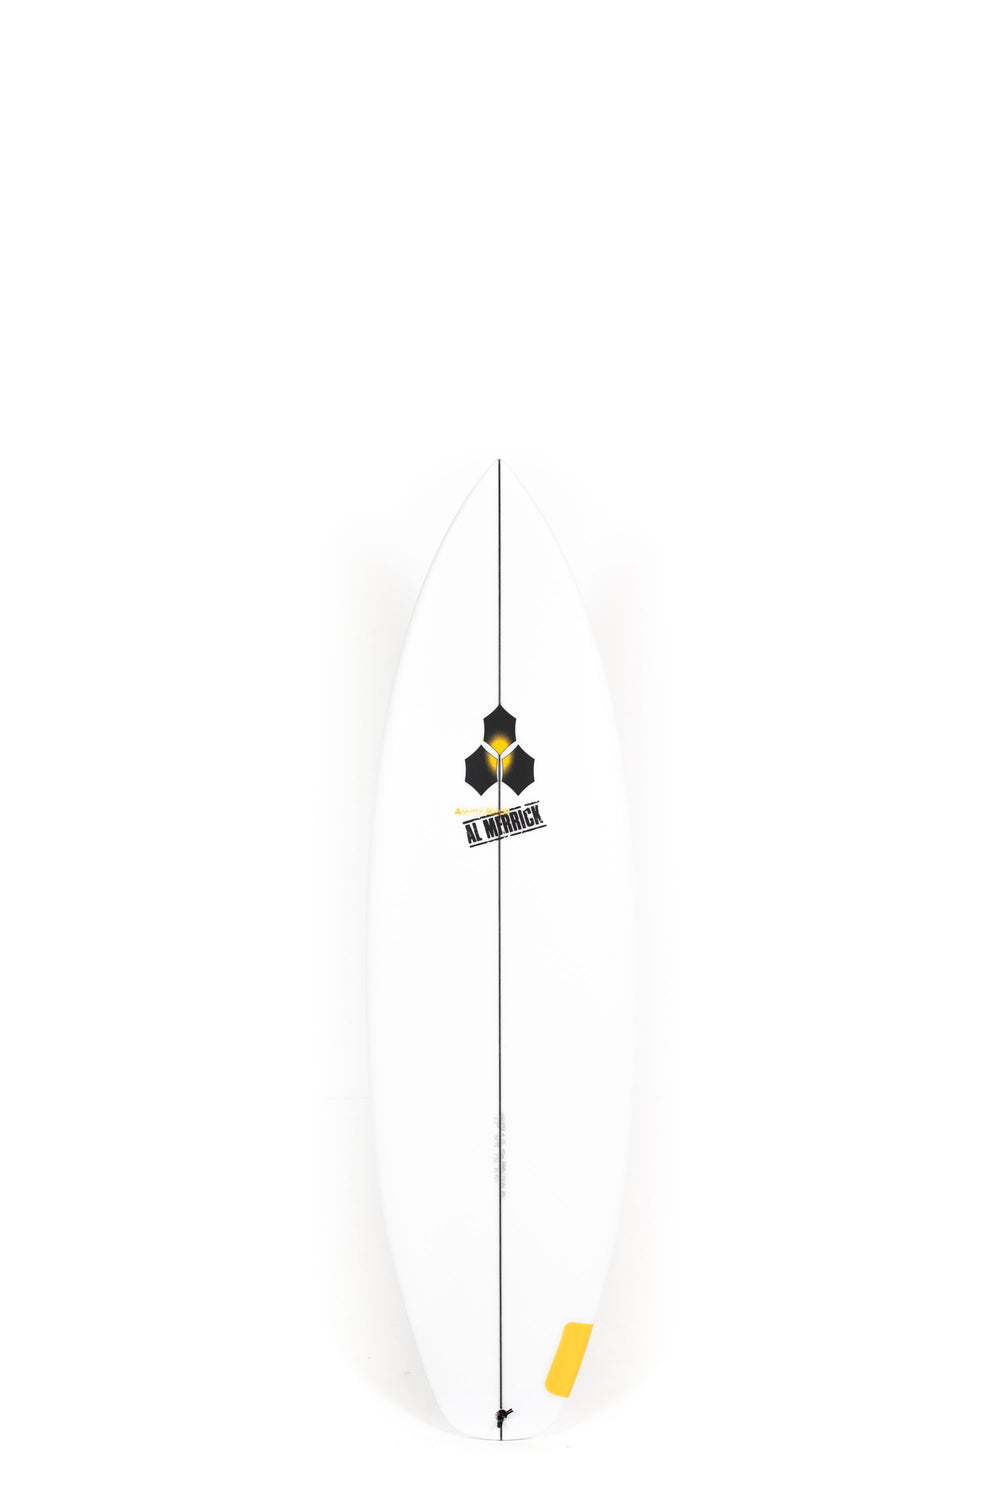 Pukas-Surf-Shop-Channel-Island-Surfboards-Happy-Every-Day-Al-Merrick-6_2_-CI31898